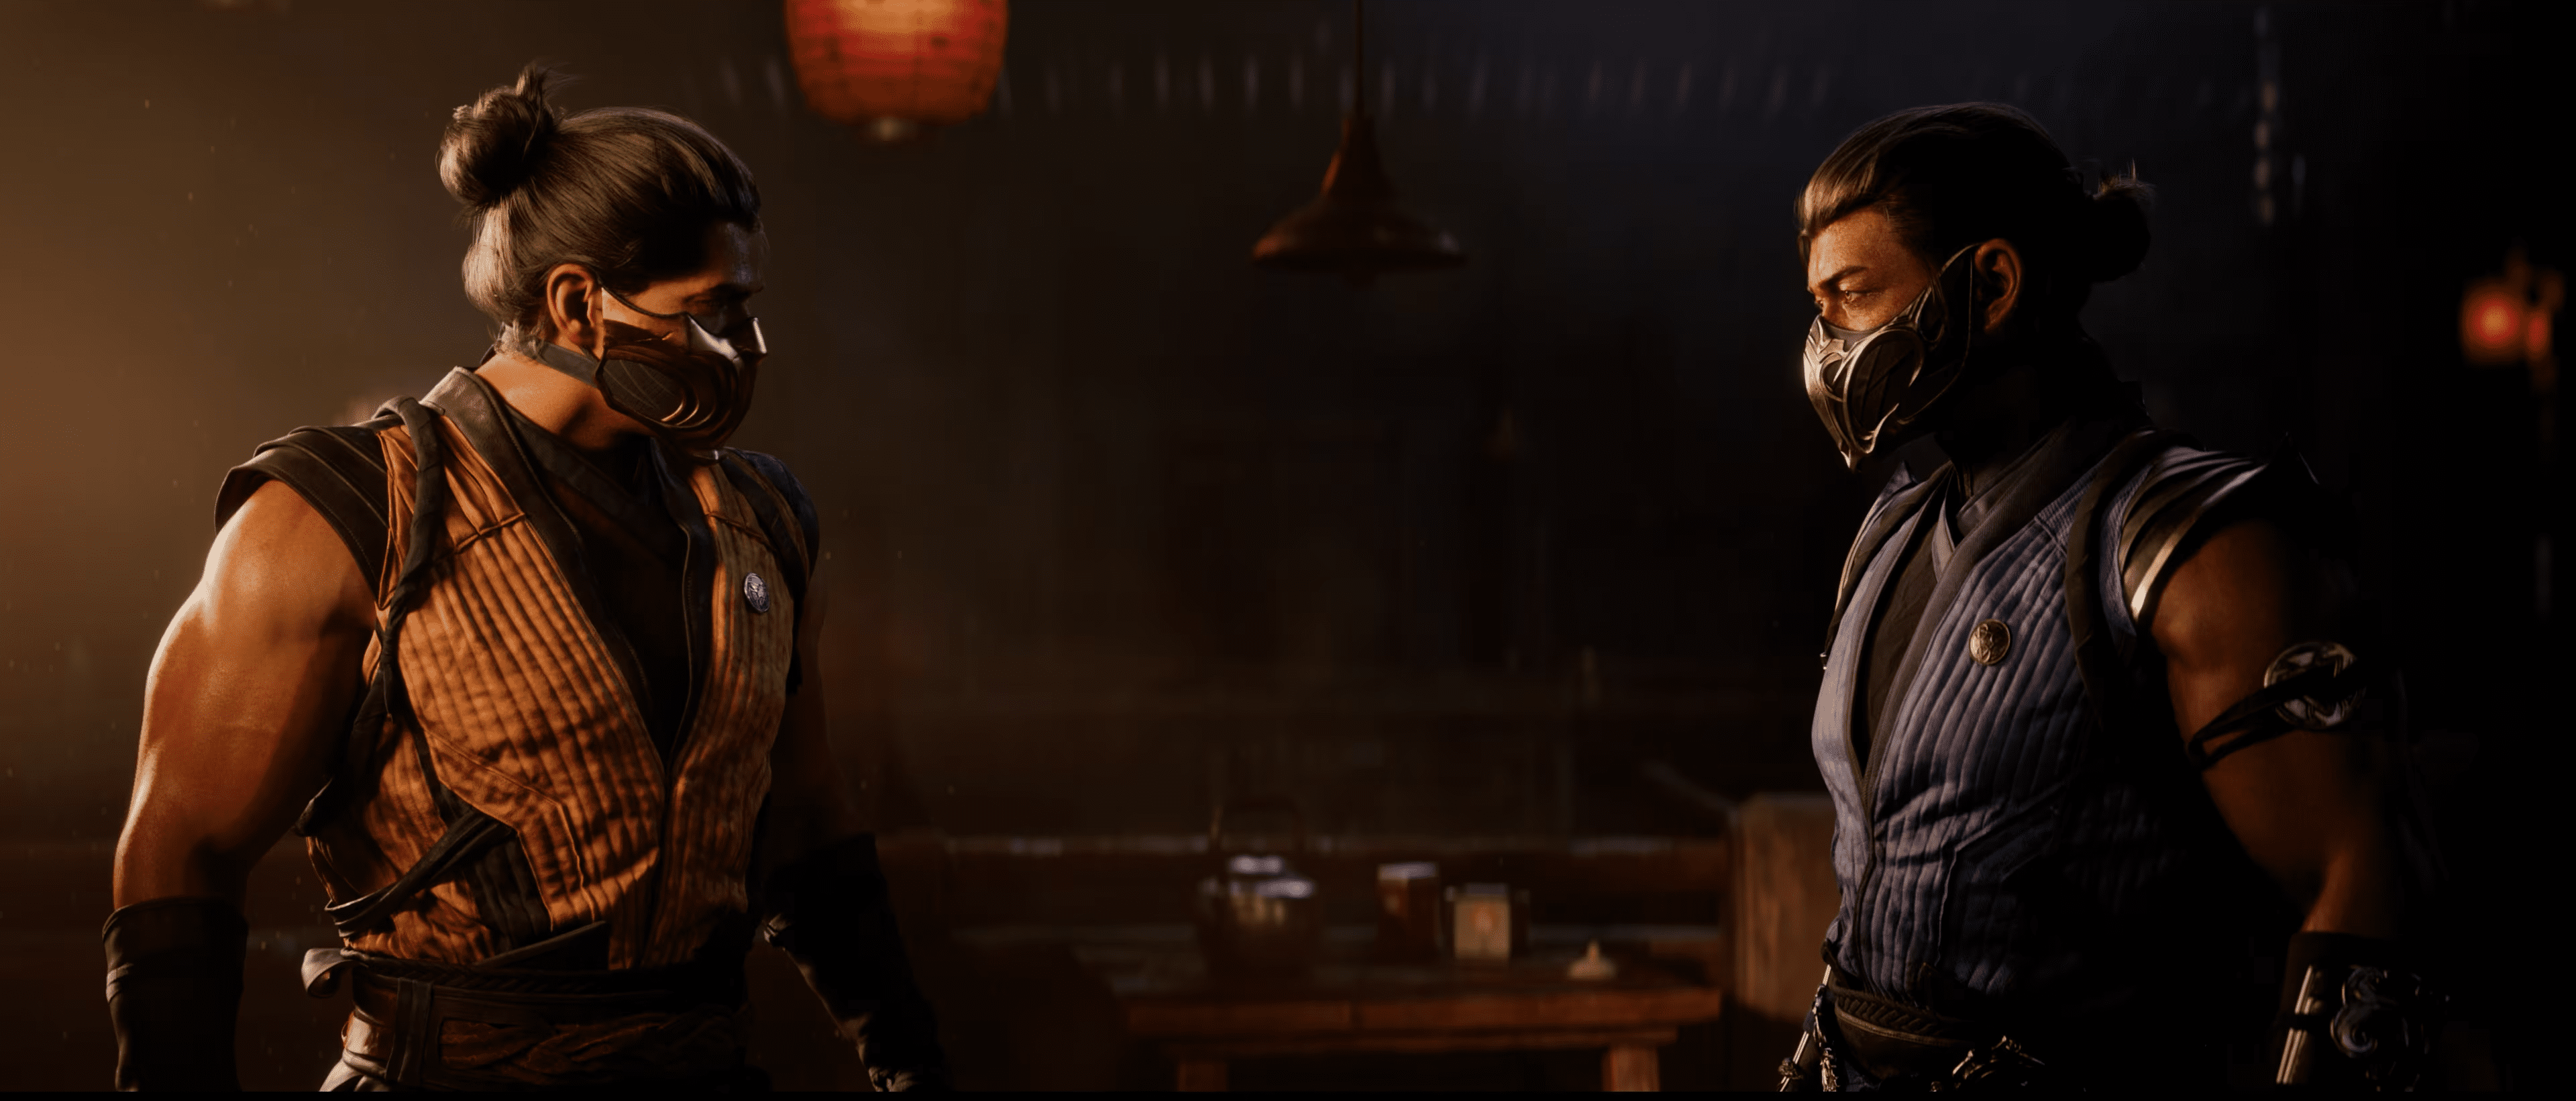 Jogos] Mortal Kombat X : Quan Chi revelado - Menos Fios